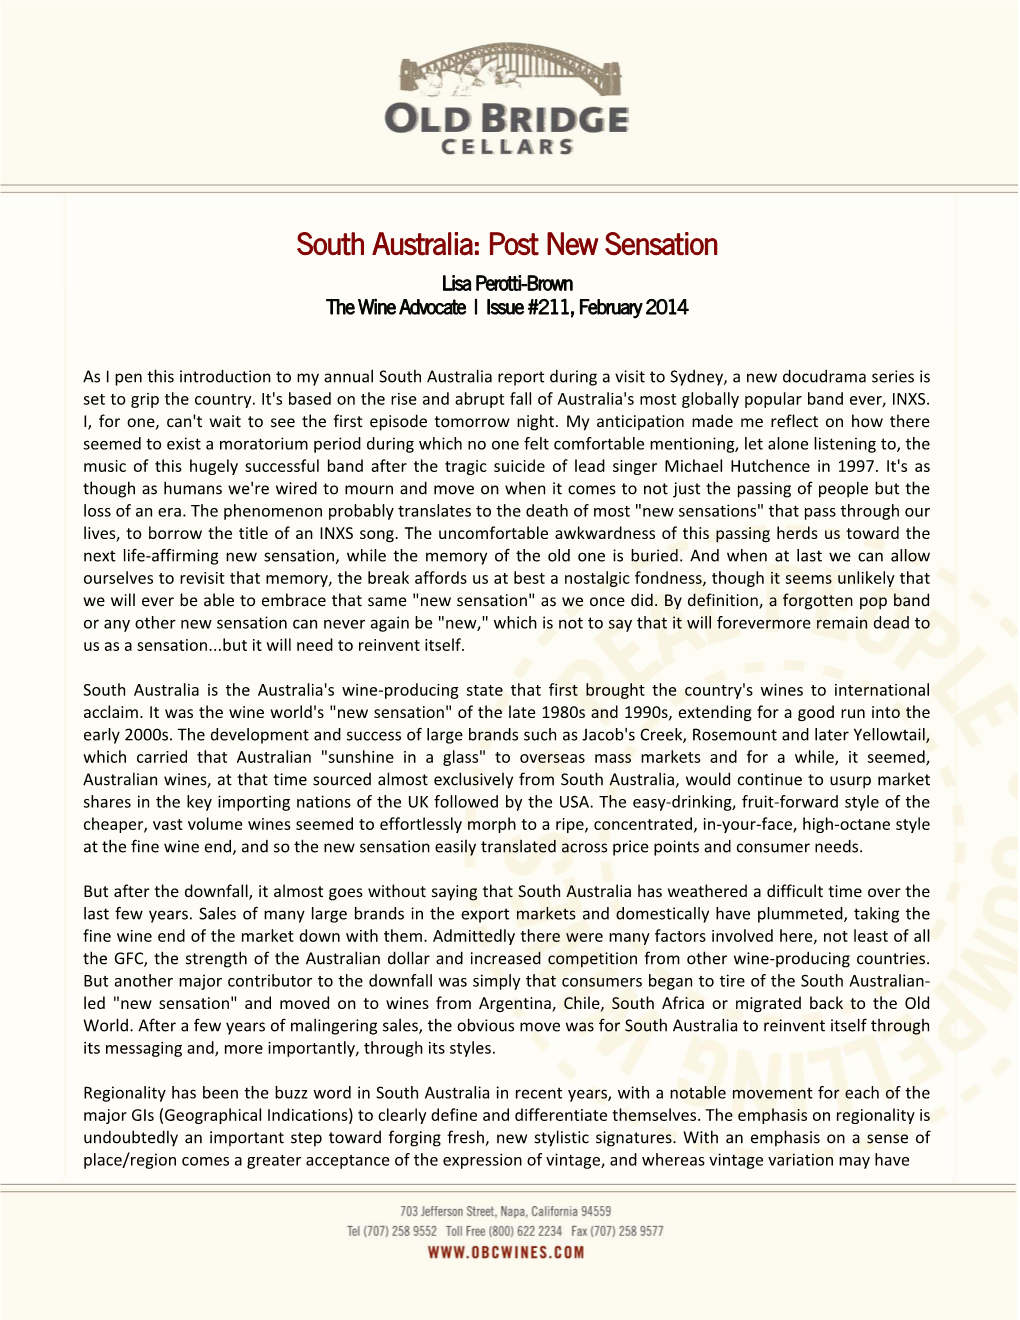 South Australia: Post New Sensation Lisa Perotti-Brown the Wine Advocate | Issue #211, February 2014